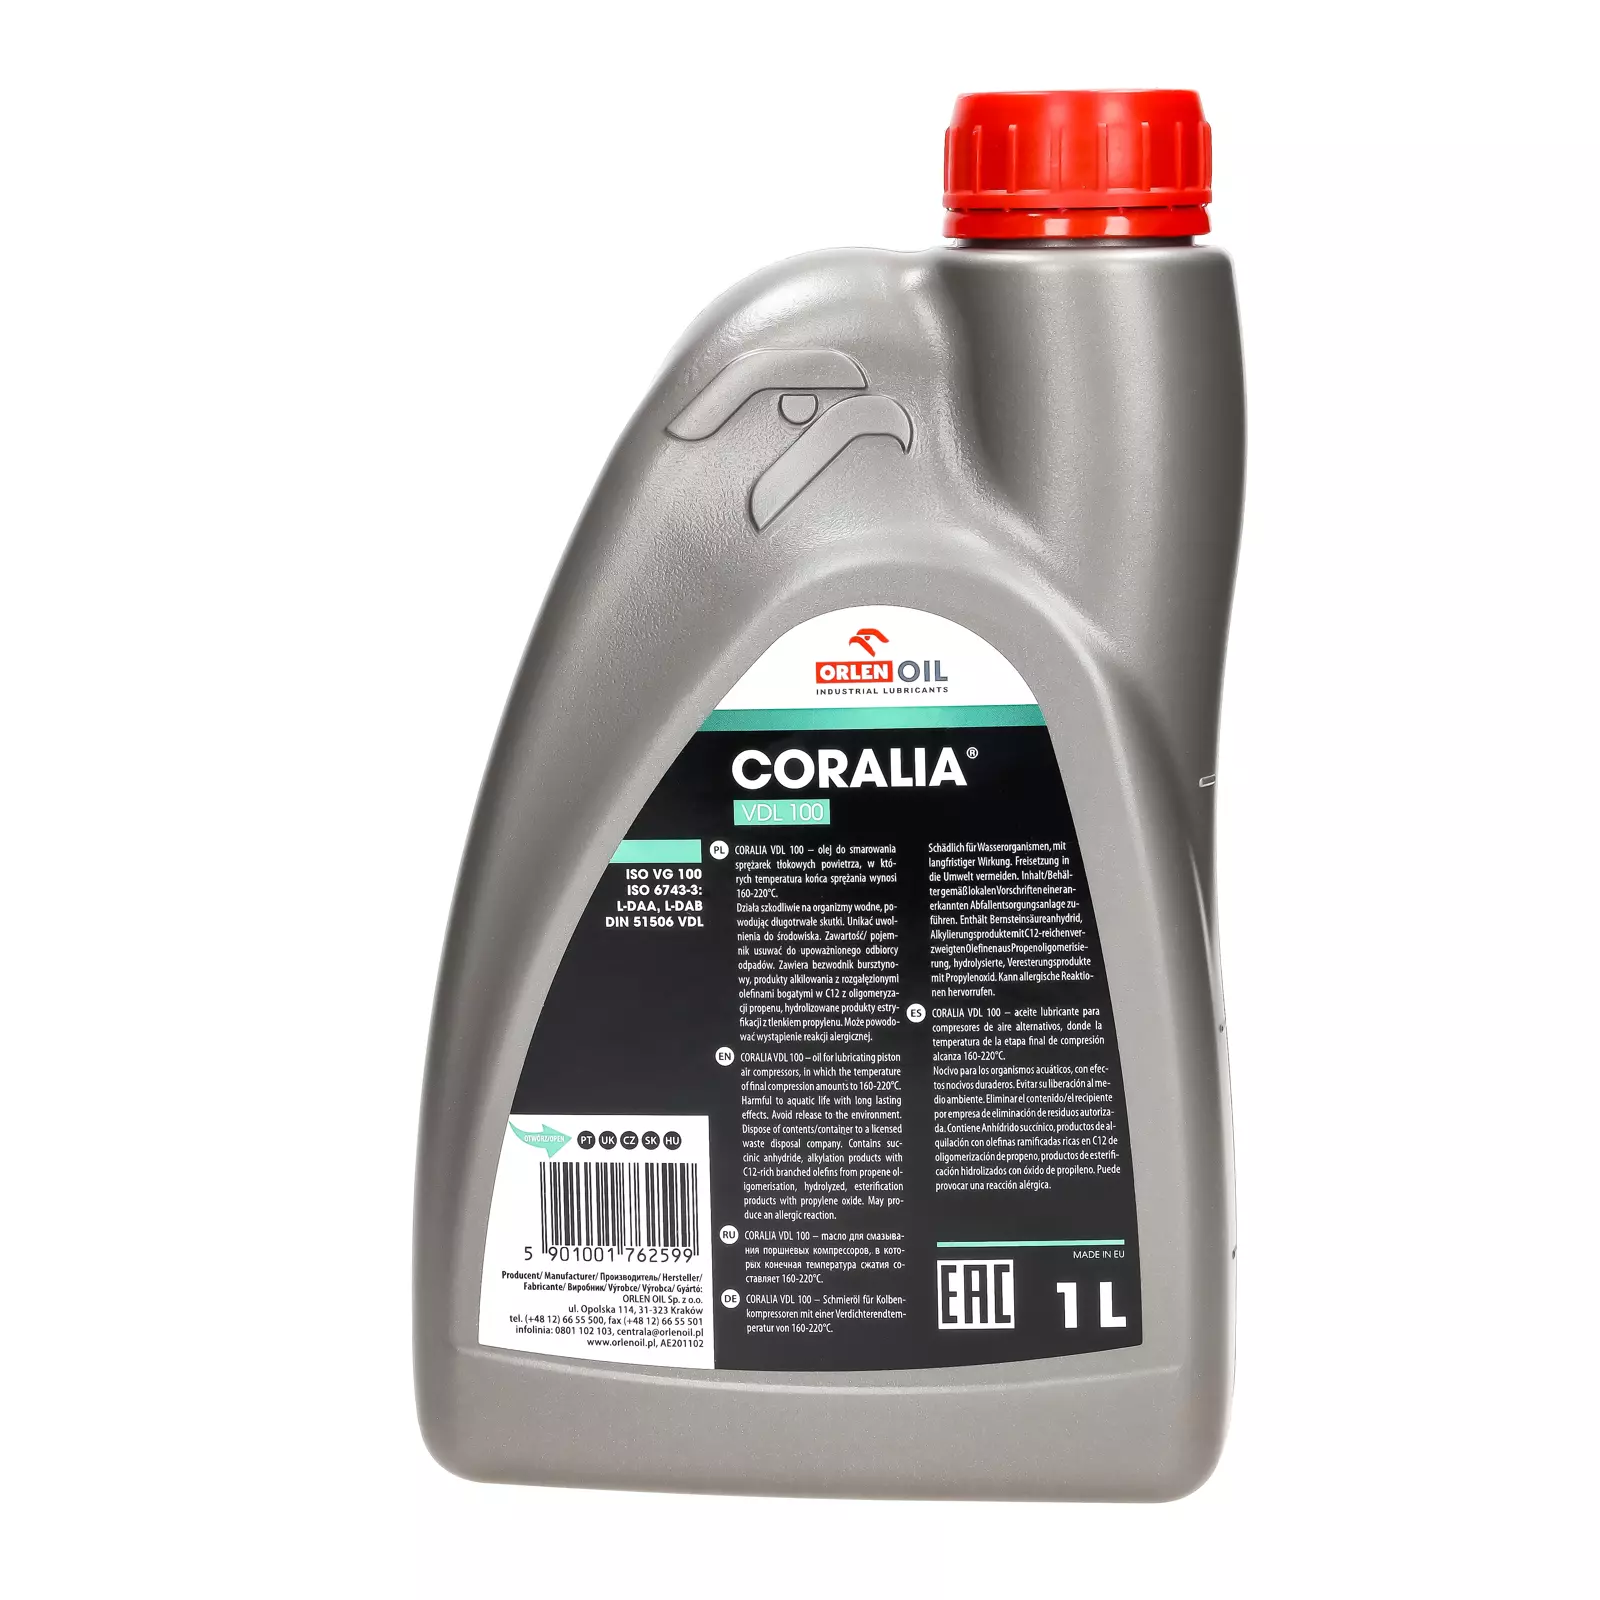 Компрессорное масло Orlen Oil Coralia VDL 100 1л.